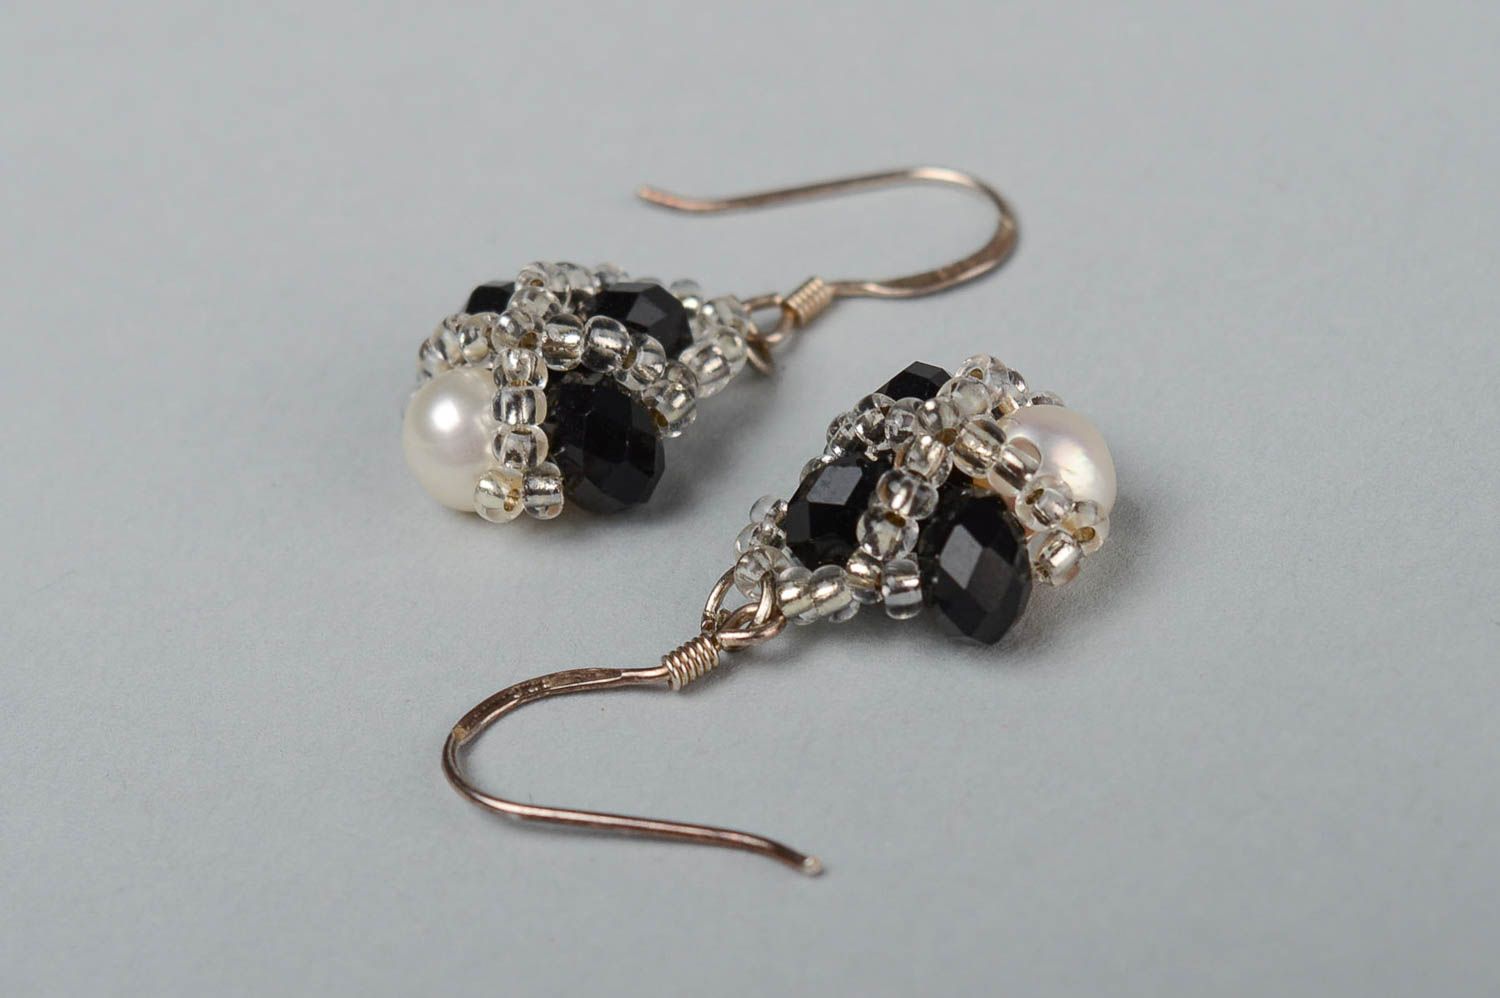 Handmade women earrings with charms pearl earrings evening earrings for girls photo 3